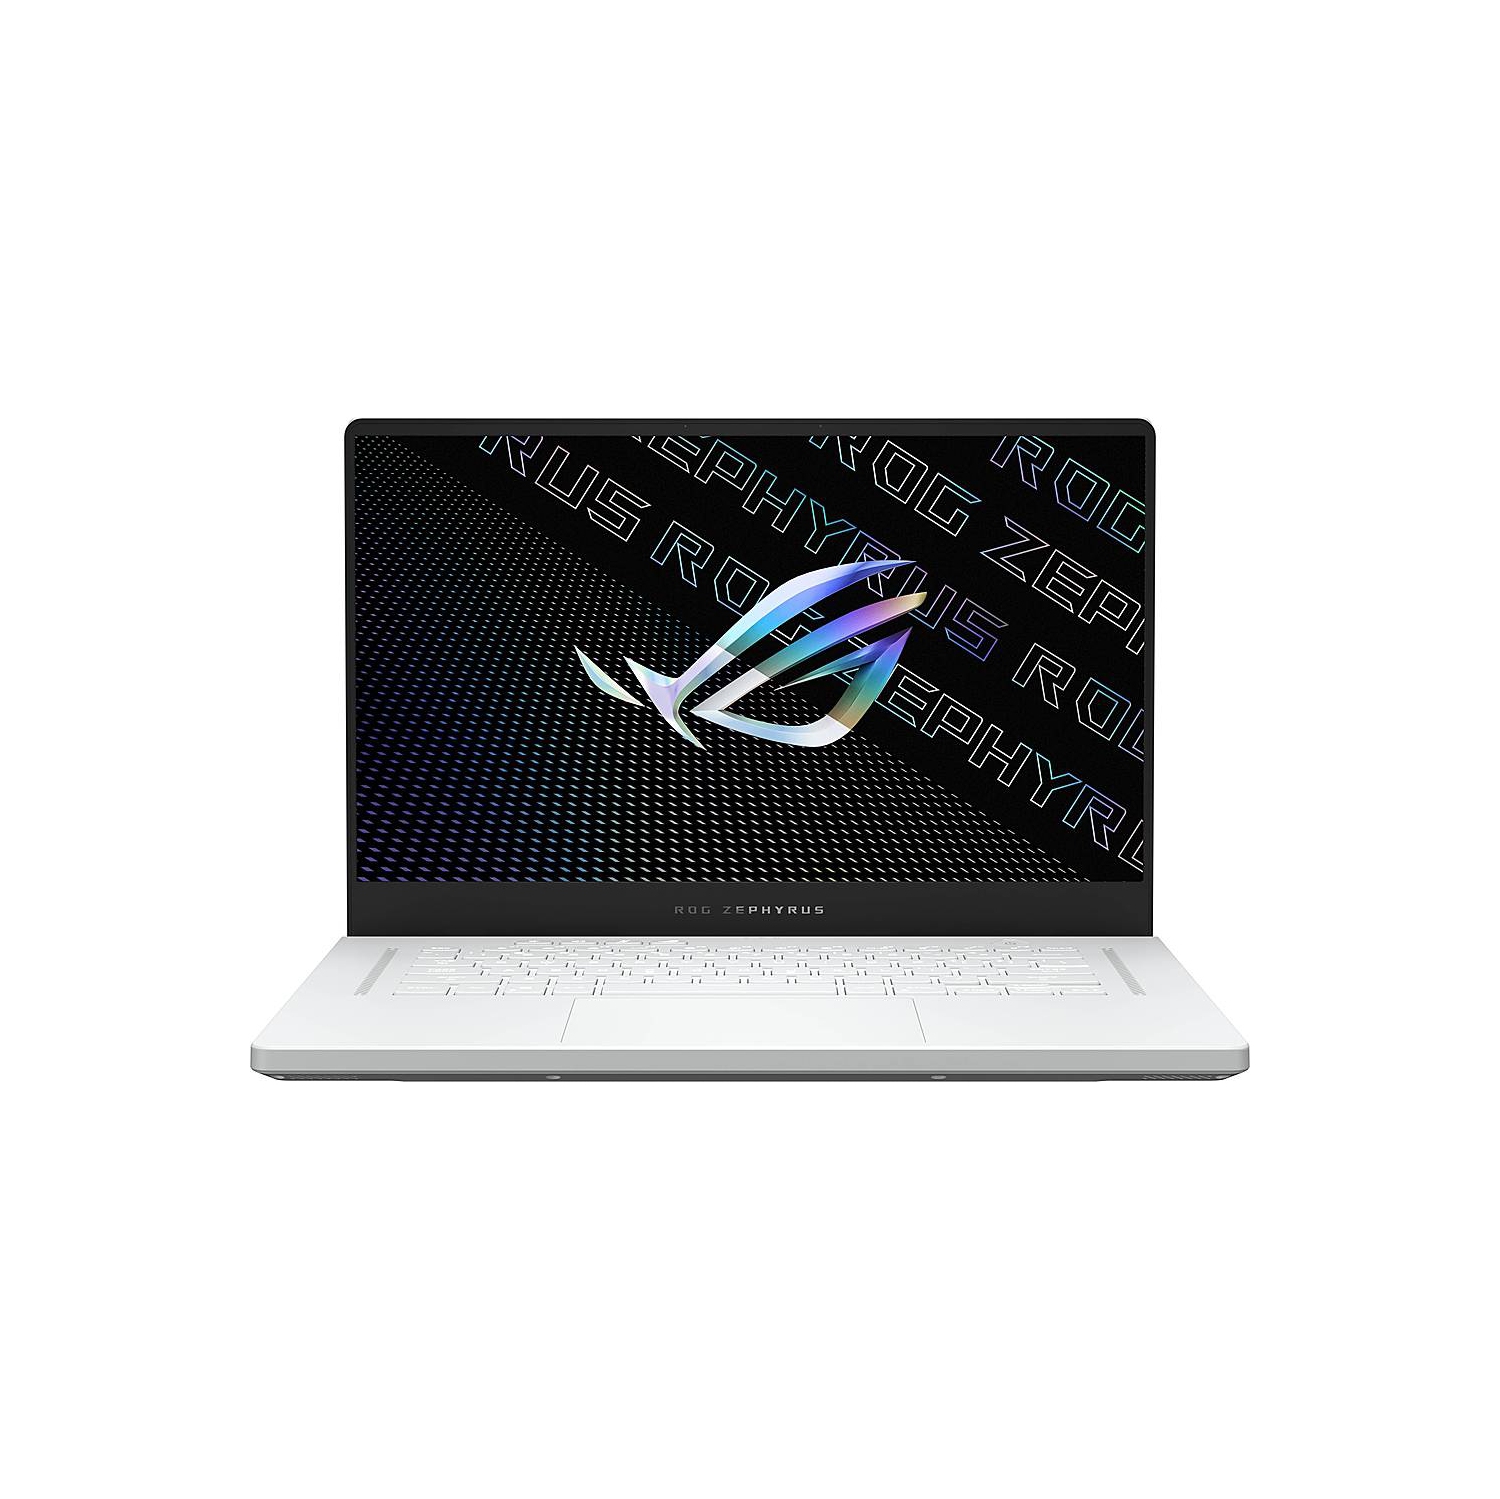 Custom ASUS ROG Zephyrus G15 Laptop (AMD Ryzen 9 5900HS, 48GB RAM, 4TB PCIe SSD, NVIDIA RTX 3080 Max-Q, Win 10 Pro)